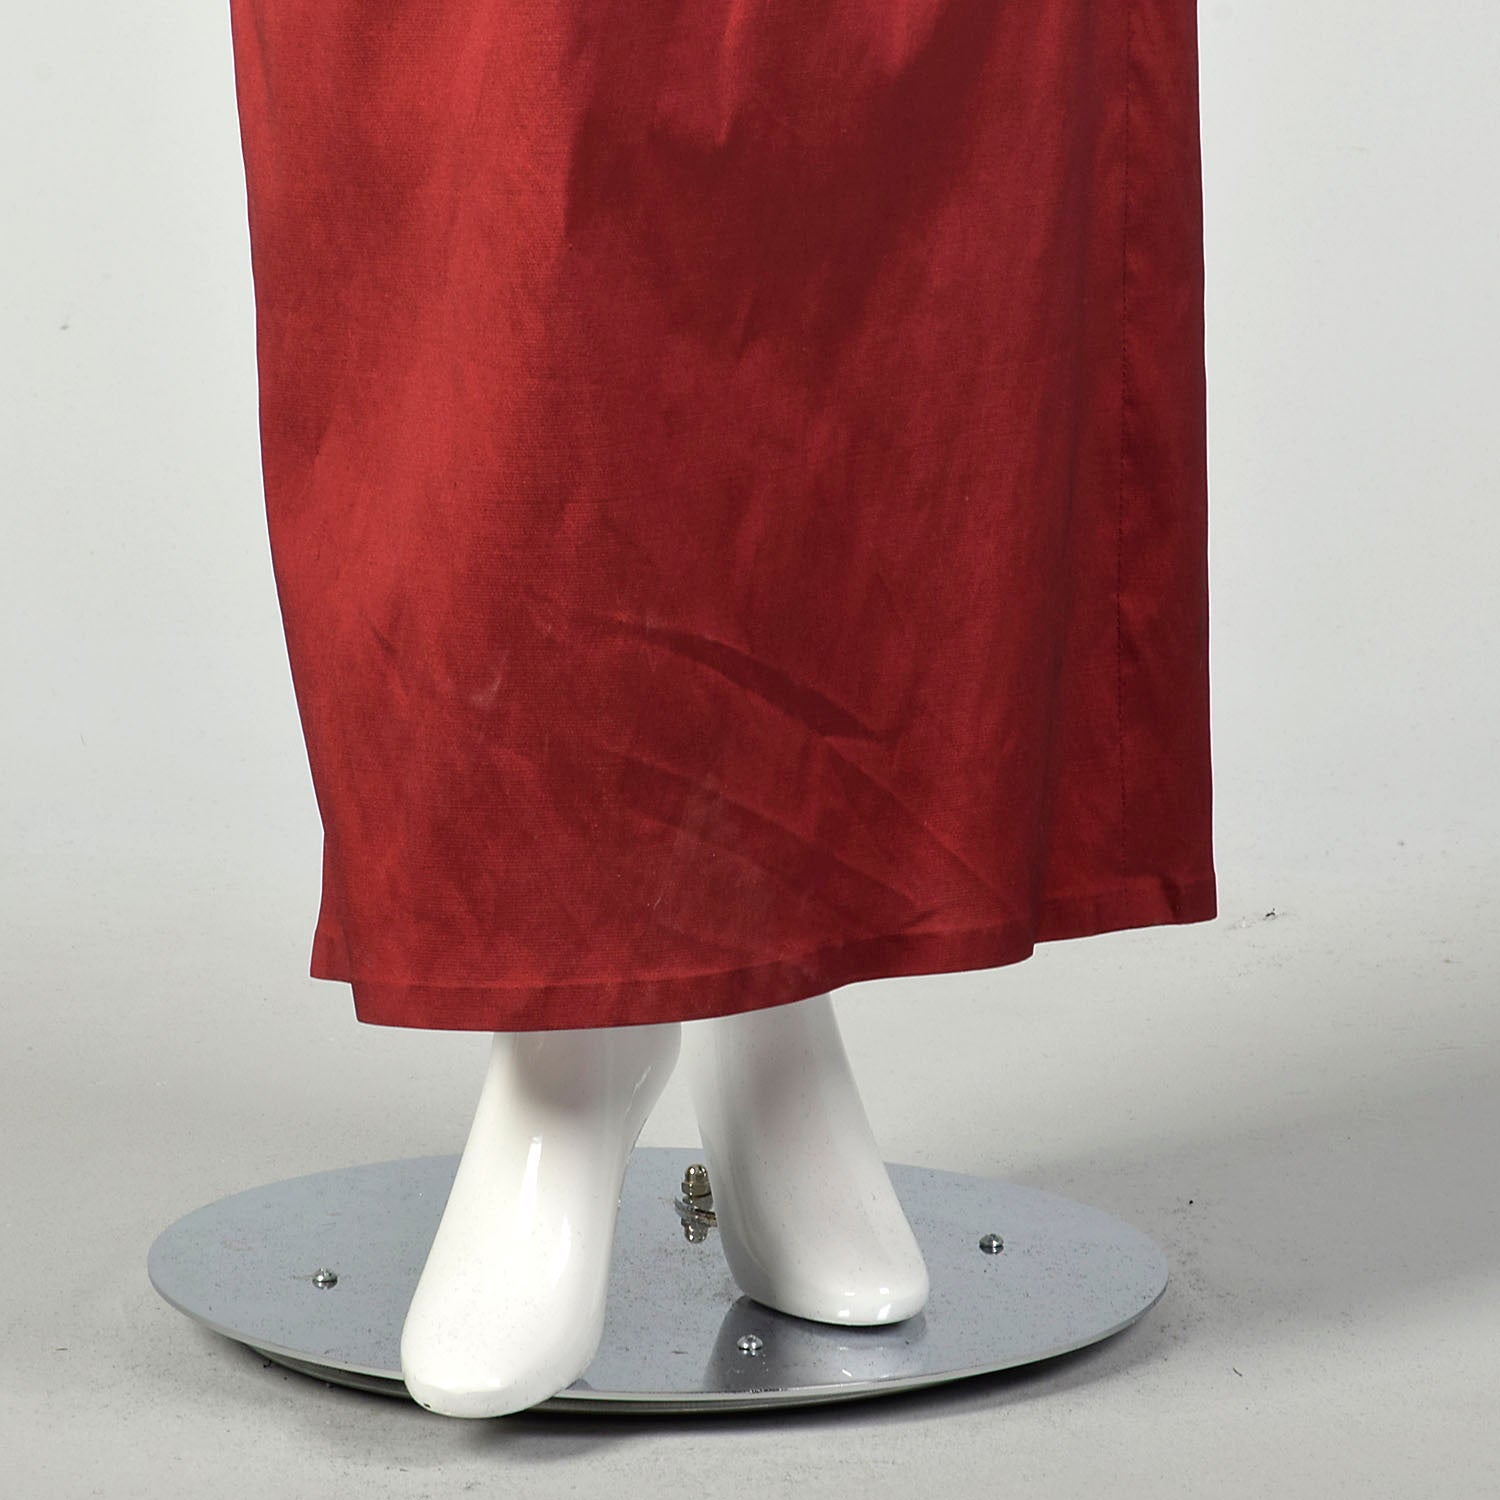 Small Talbot Runhof Red Evening Gown Sweetheart Neckline Formal Dress